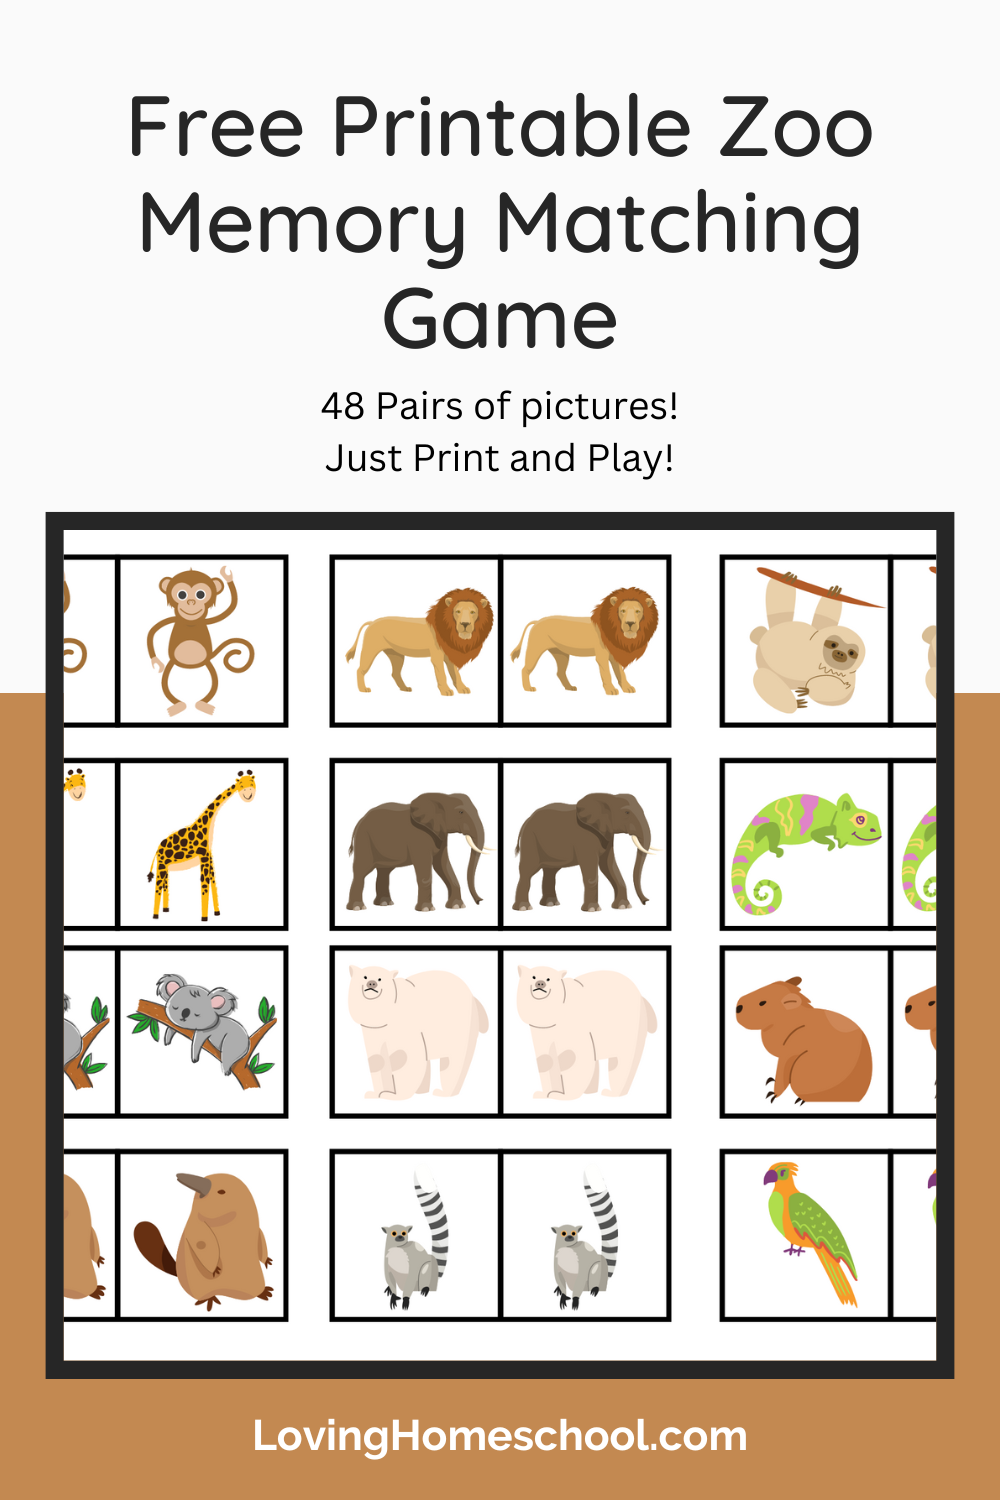 Free Printable Zoo Memory Matching Game